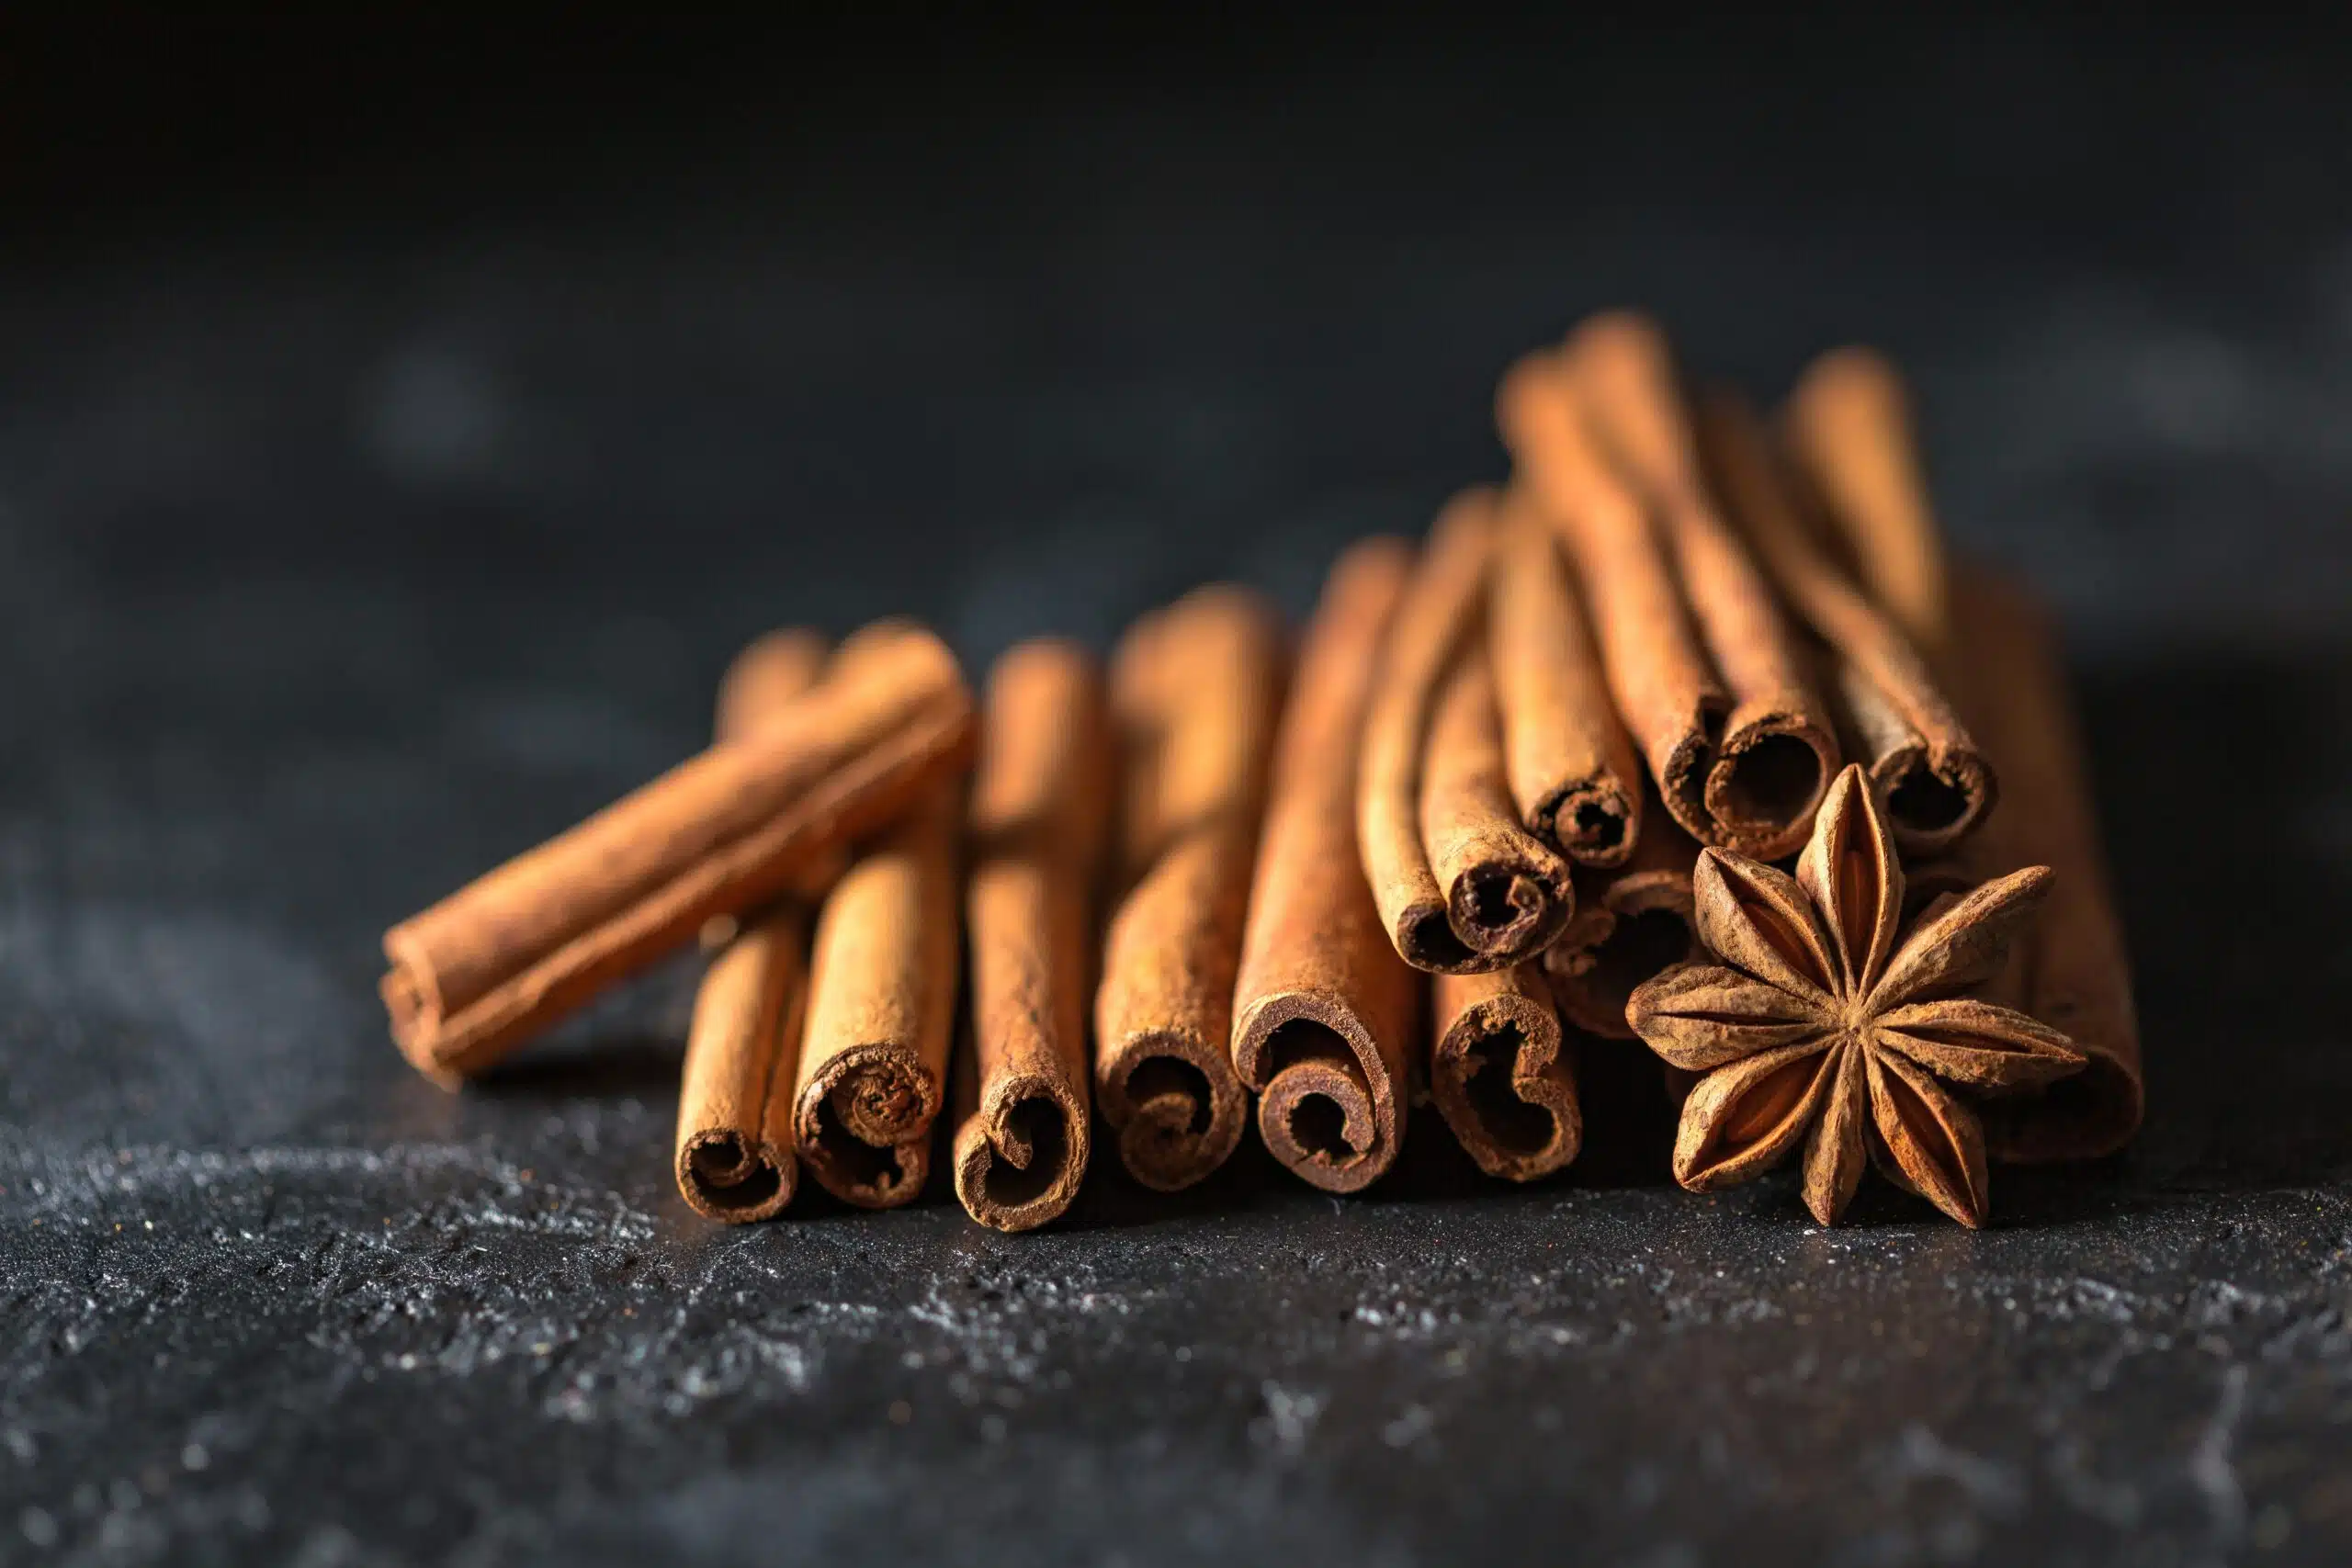 Cinnamon Sticks Recipe